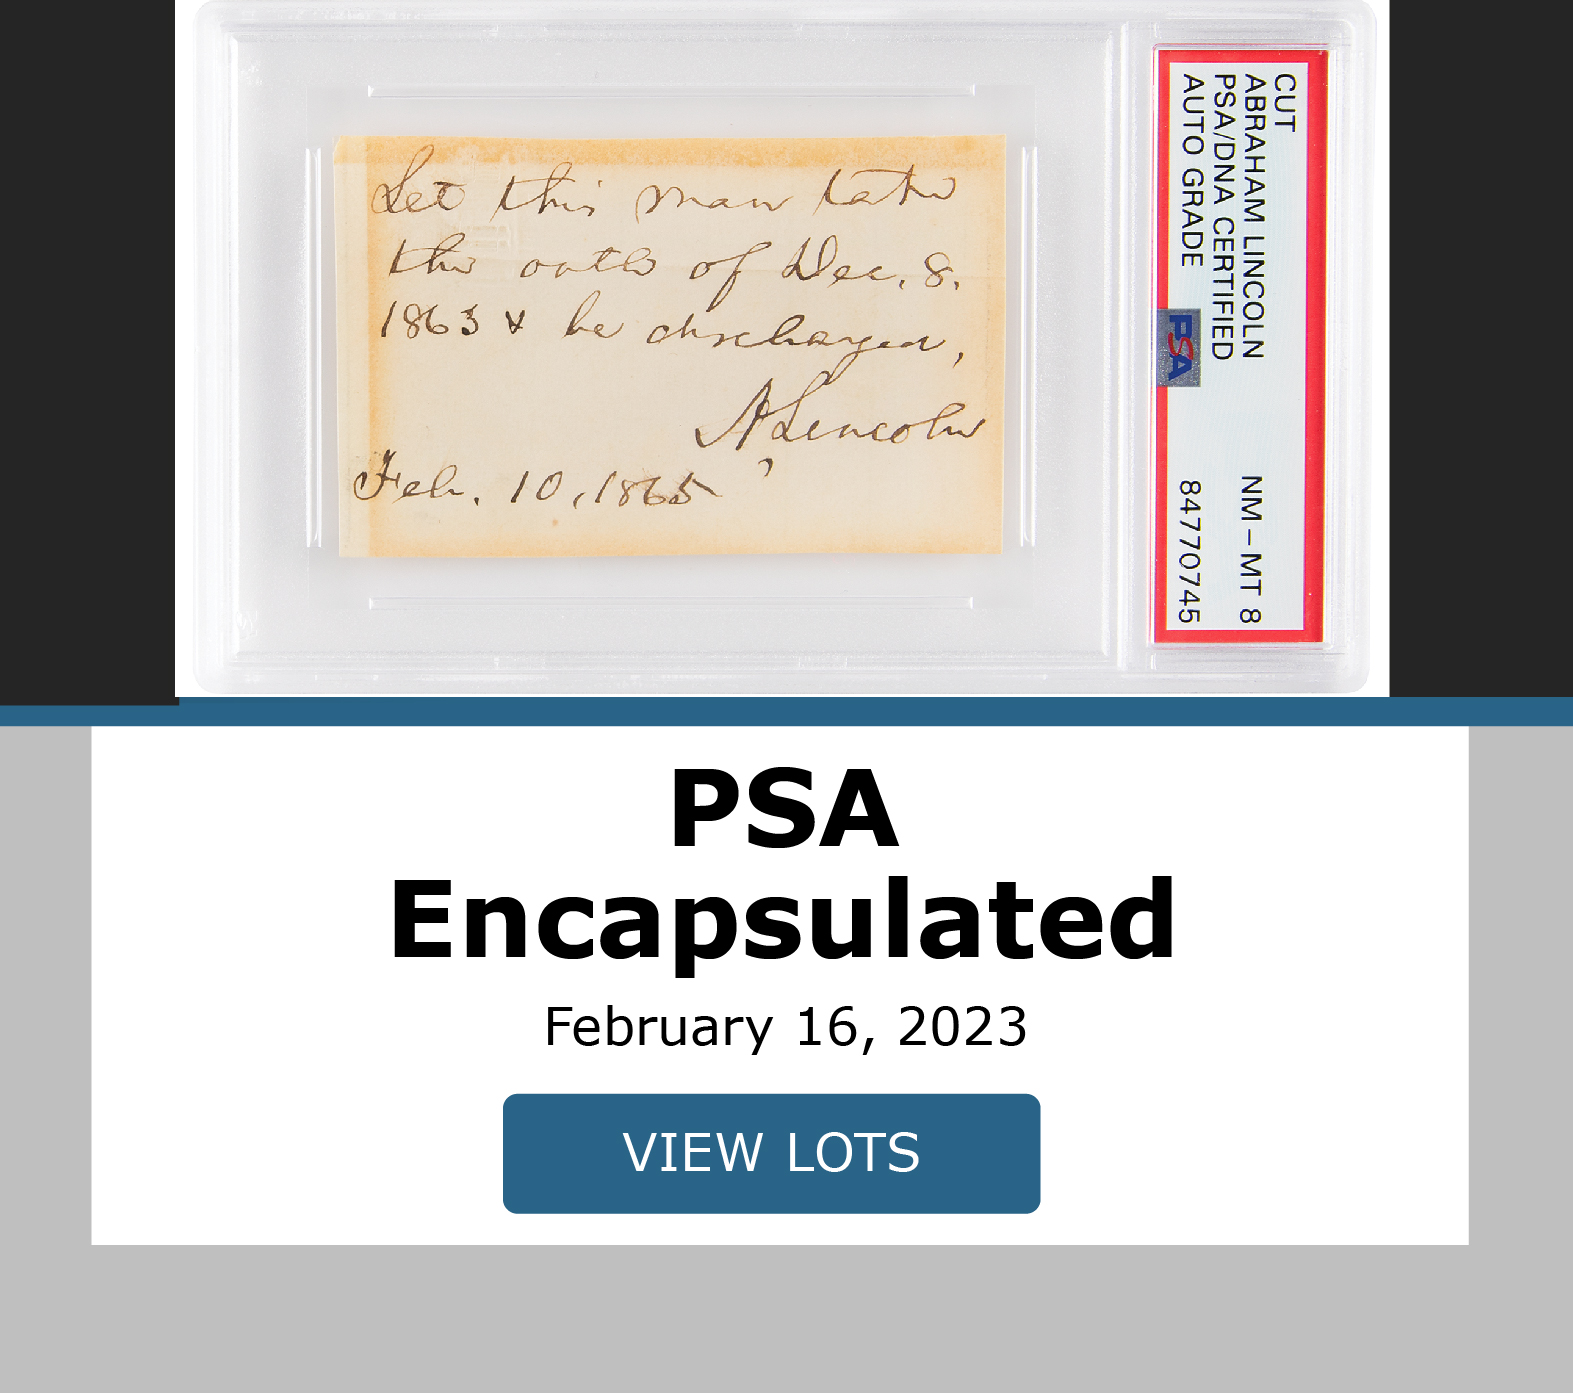 PSA Encapsulated Auction. Bidding closes February 16, 2023. Bid Now!